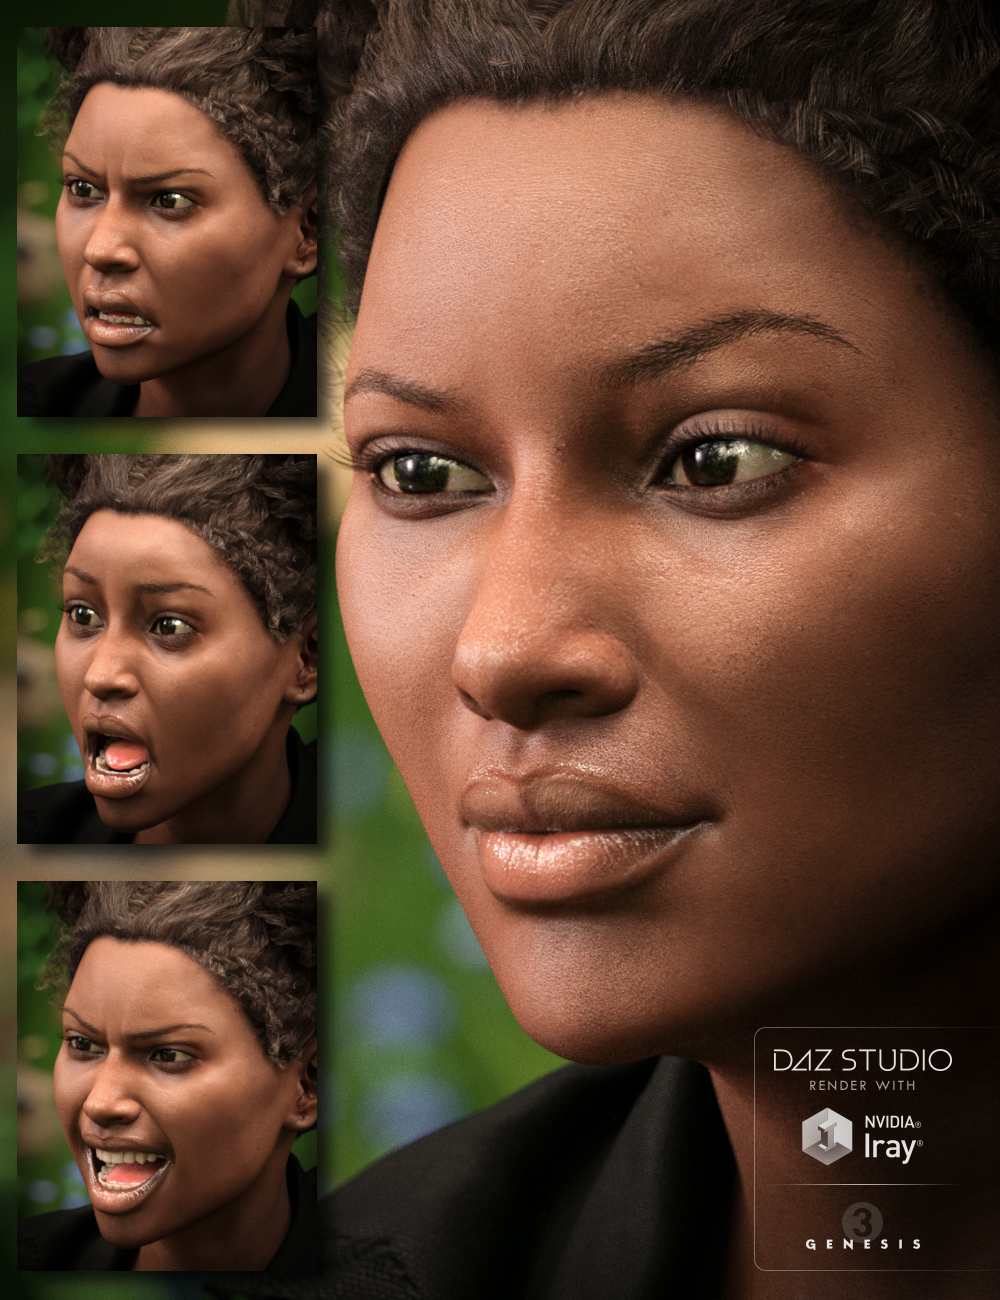 Monique 7 Wild Expressive by: Neikdian, 3D Models by Daz 3D